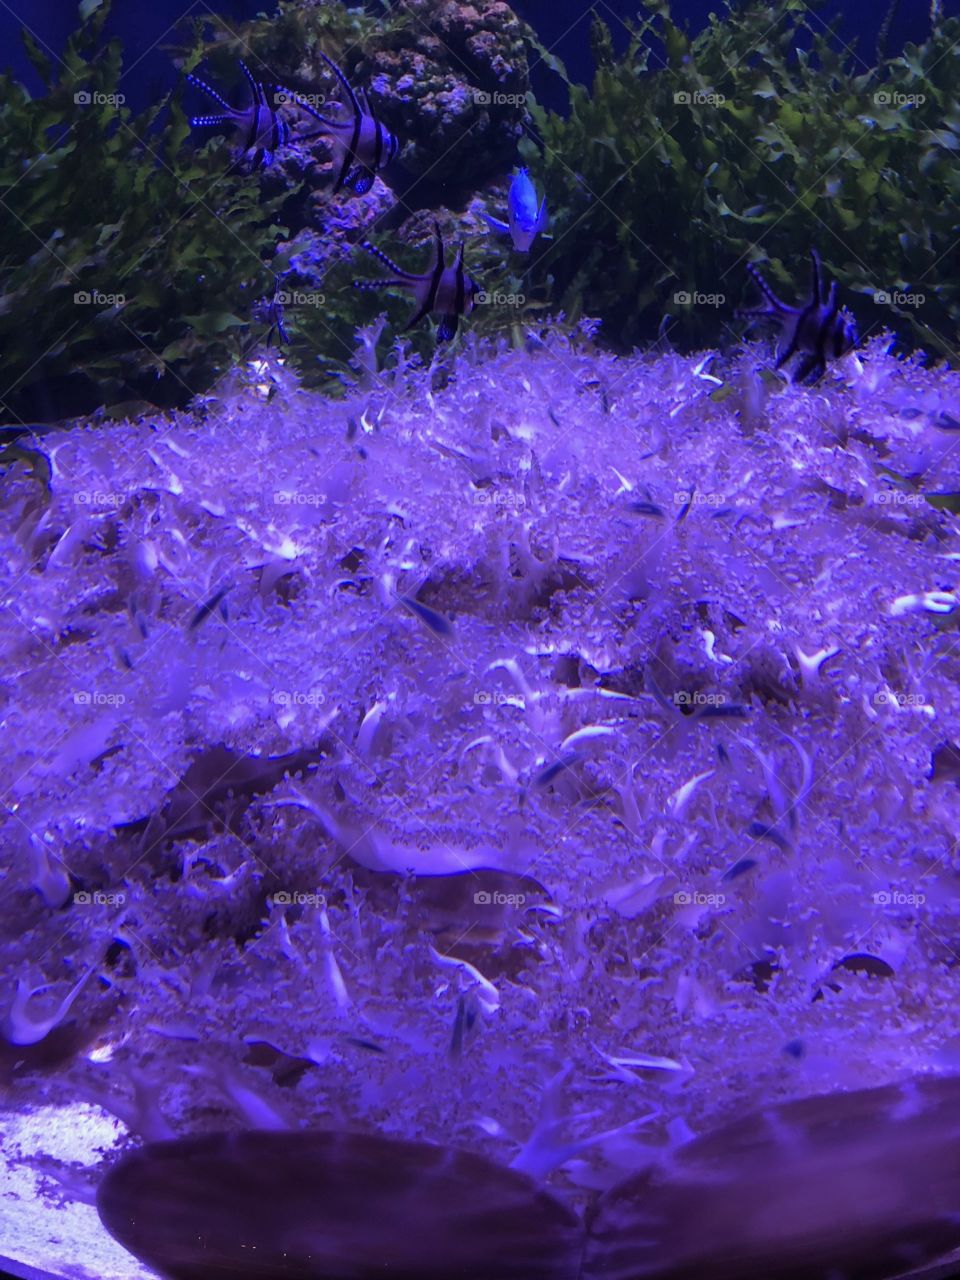 Ocean floor covered in jelly fish 